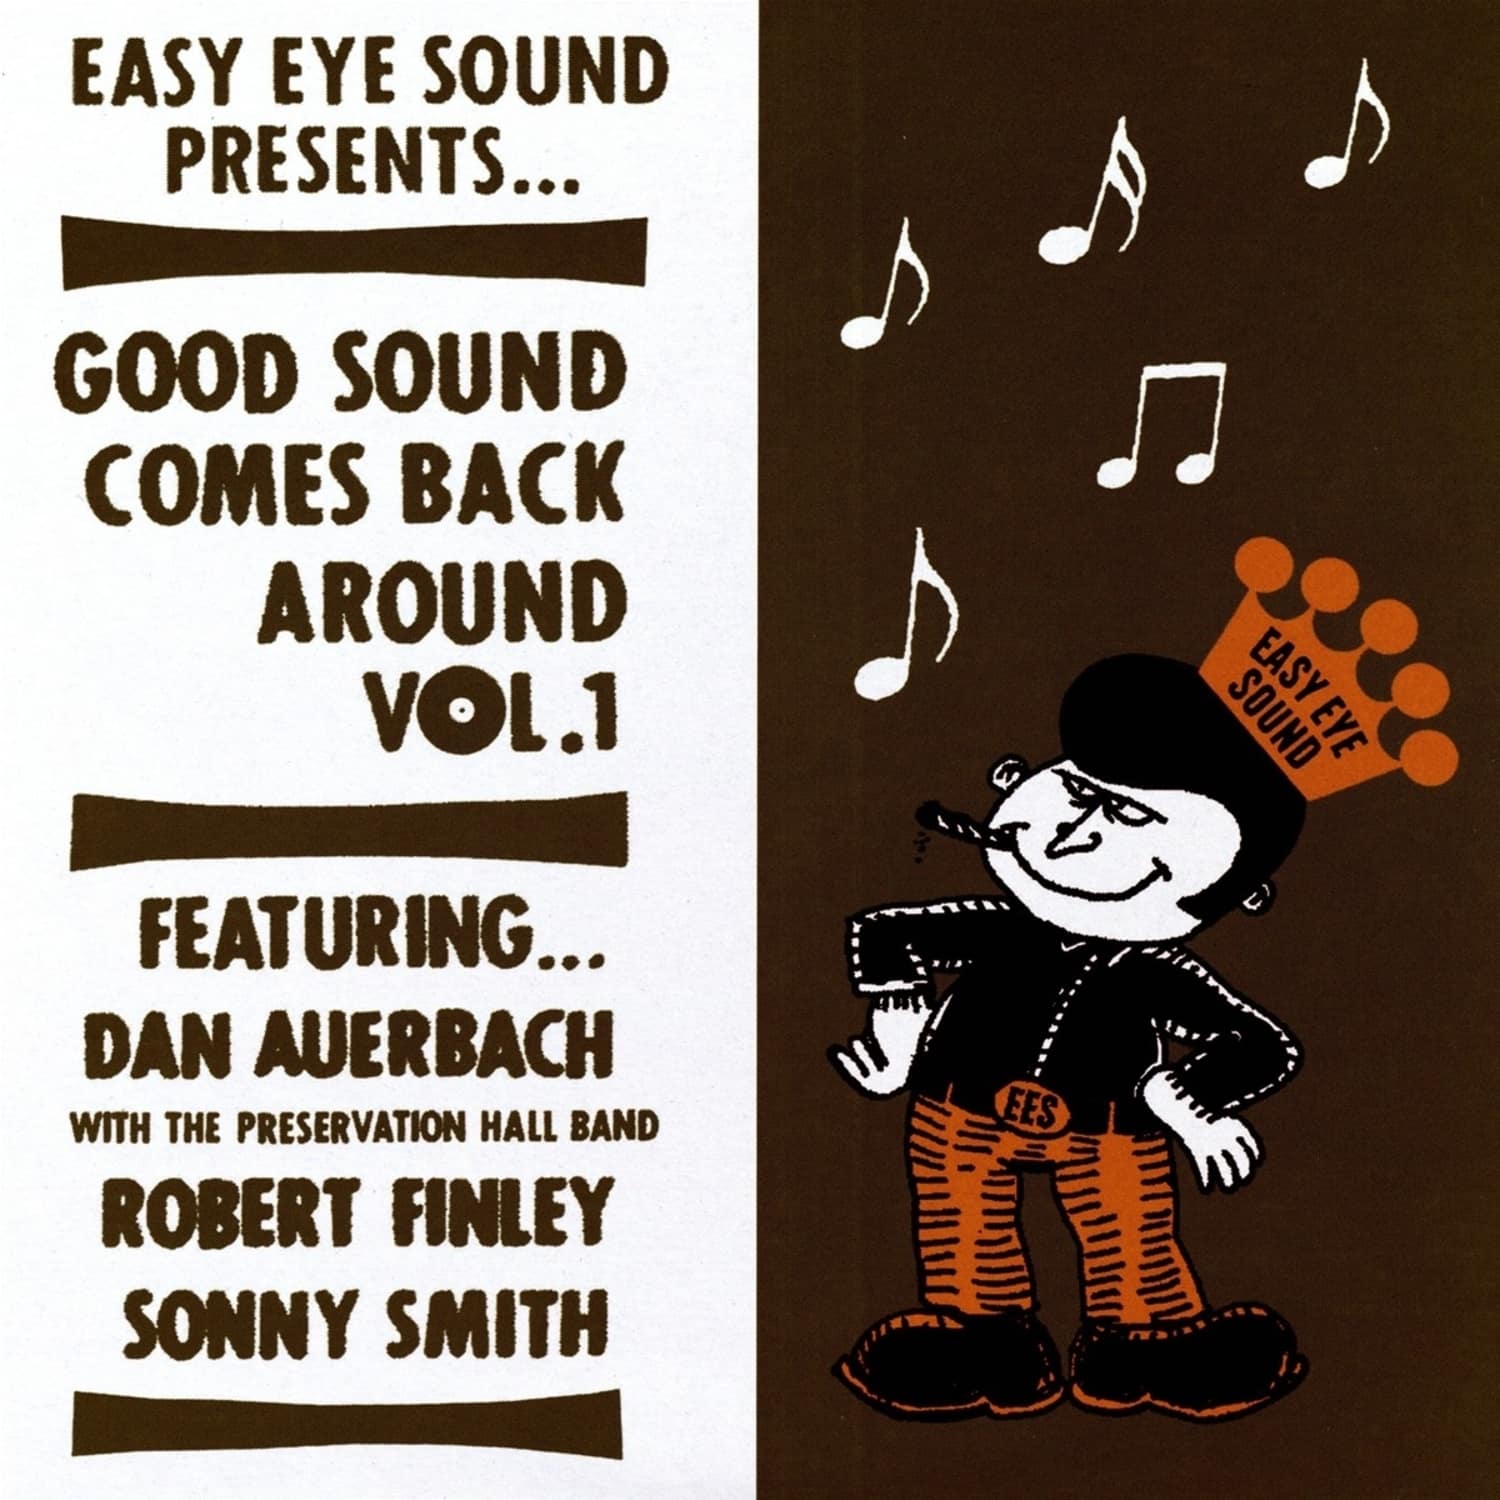 Auerbach,Dan/Smith,Sonny/Finley,Robert - GOOD SOUND COMES BACK AROUND VOL.1 